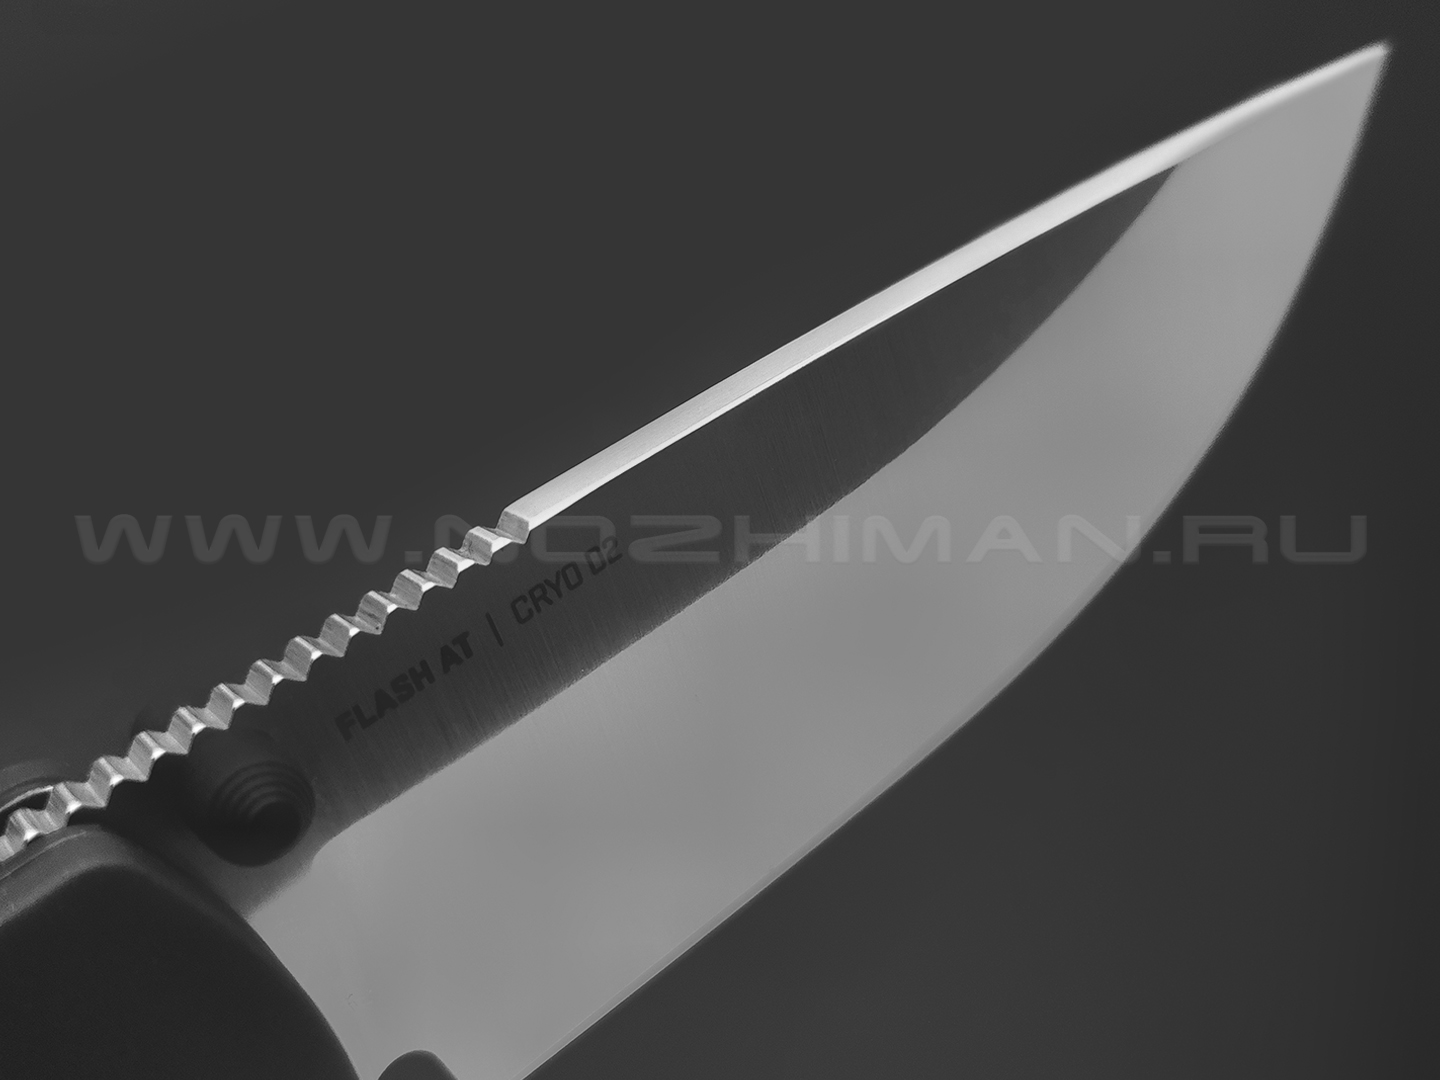 Нож SOG Flash AT Urban Grey 11-18-11-41 сталь Cryo D2 satin, рукоять Glass Reinforced Nylon